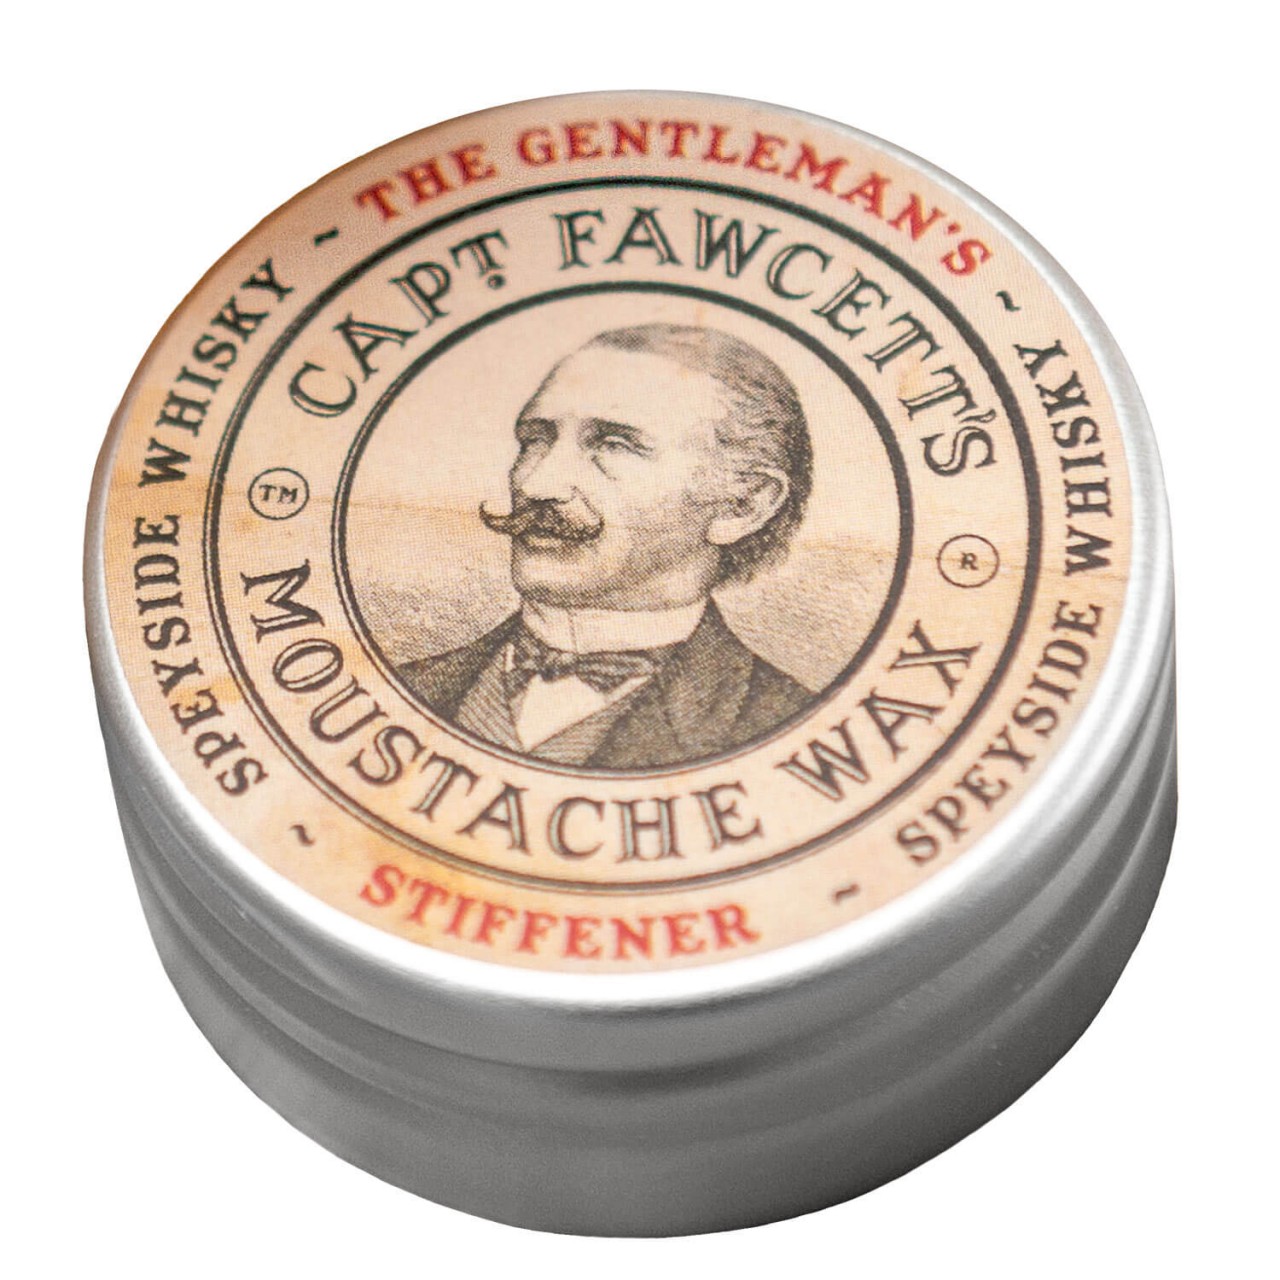 Capt. Fawcett Care - Gentleman's Stiffener Malt Whisky Moustache Wax von Captain Fawcett